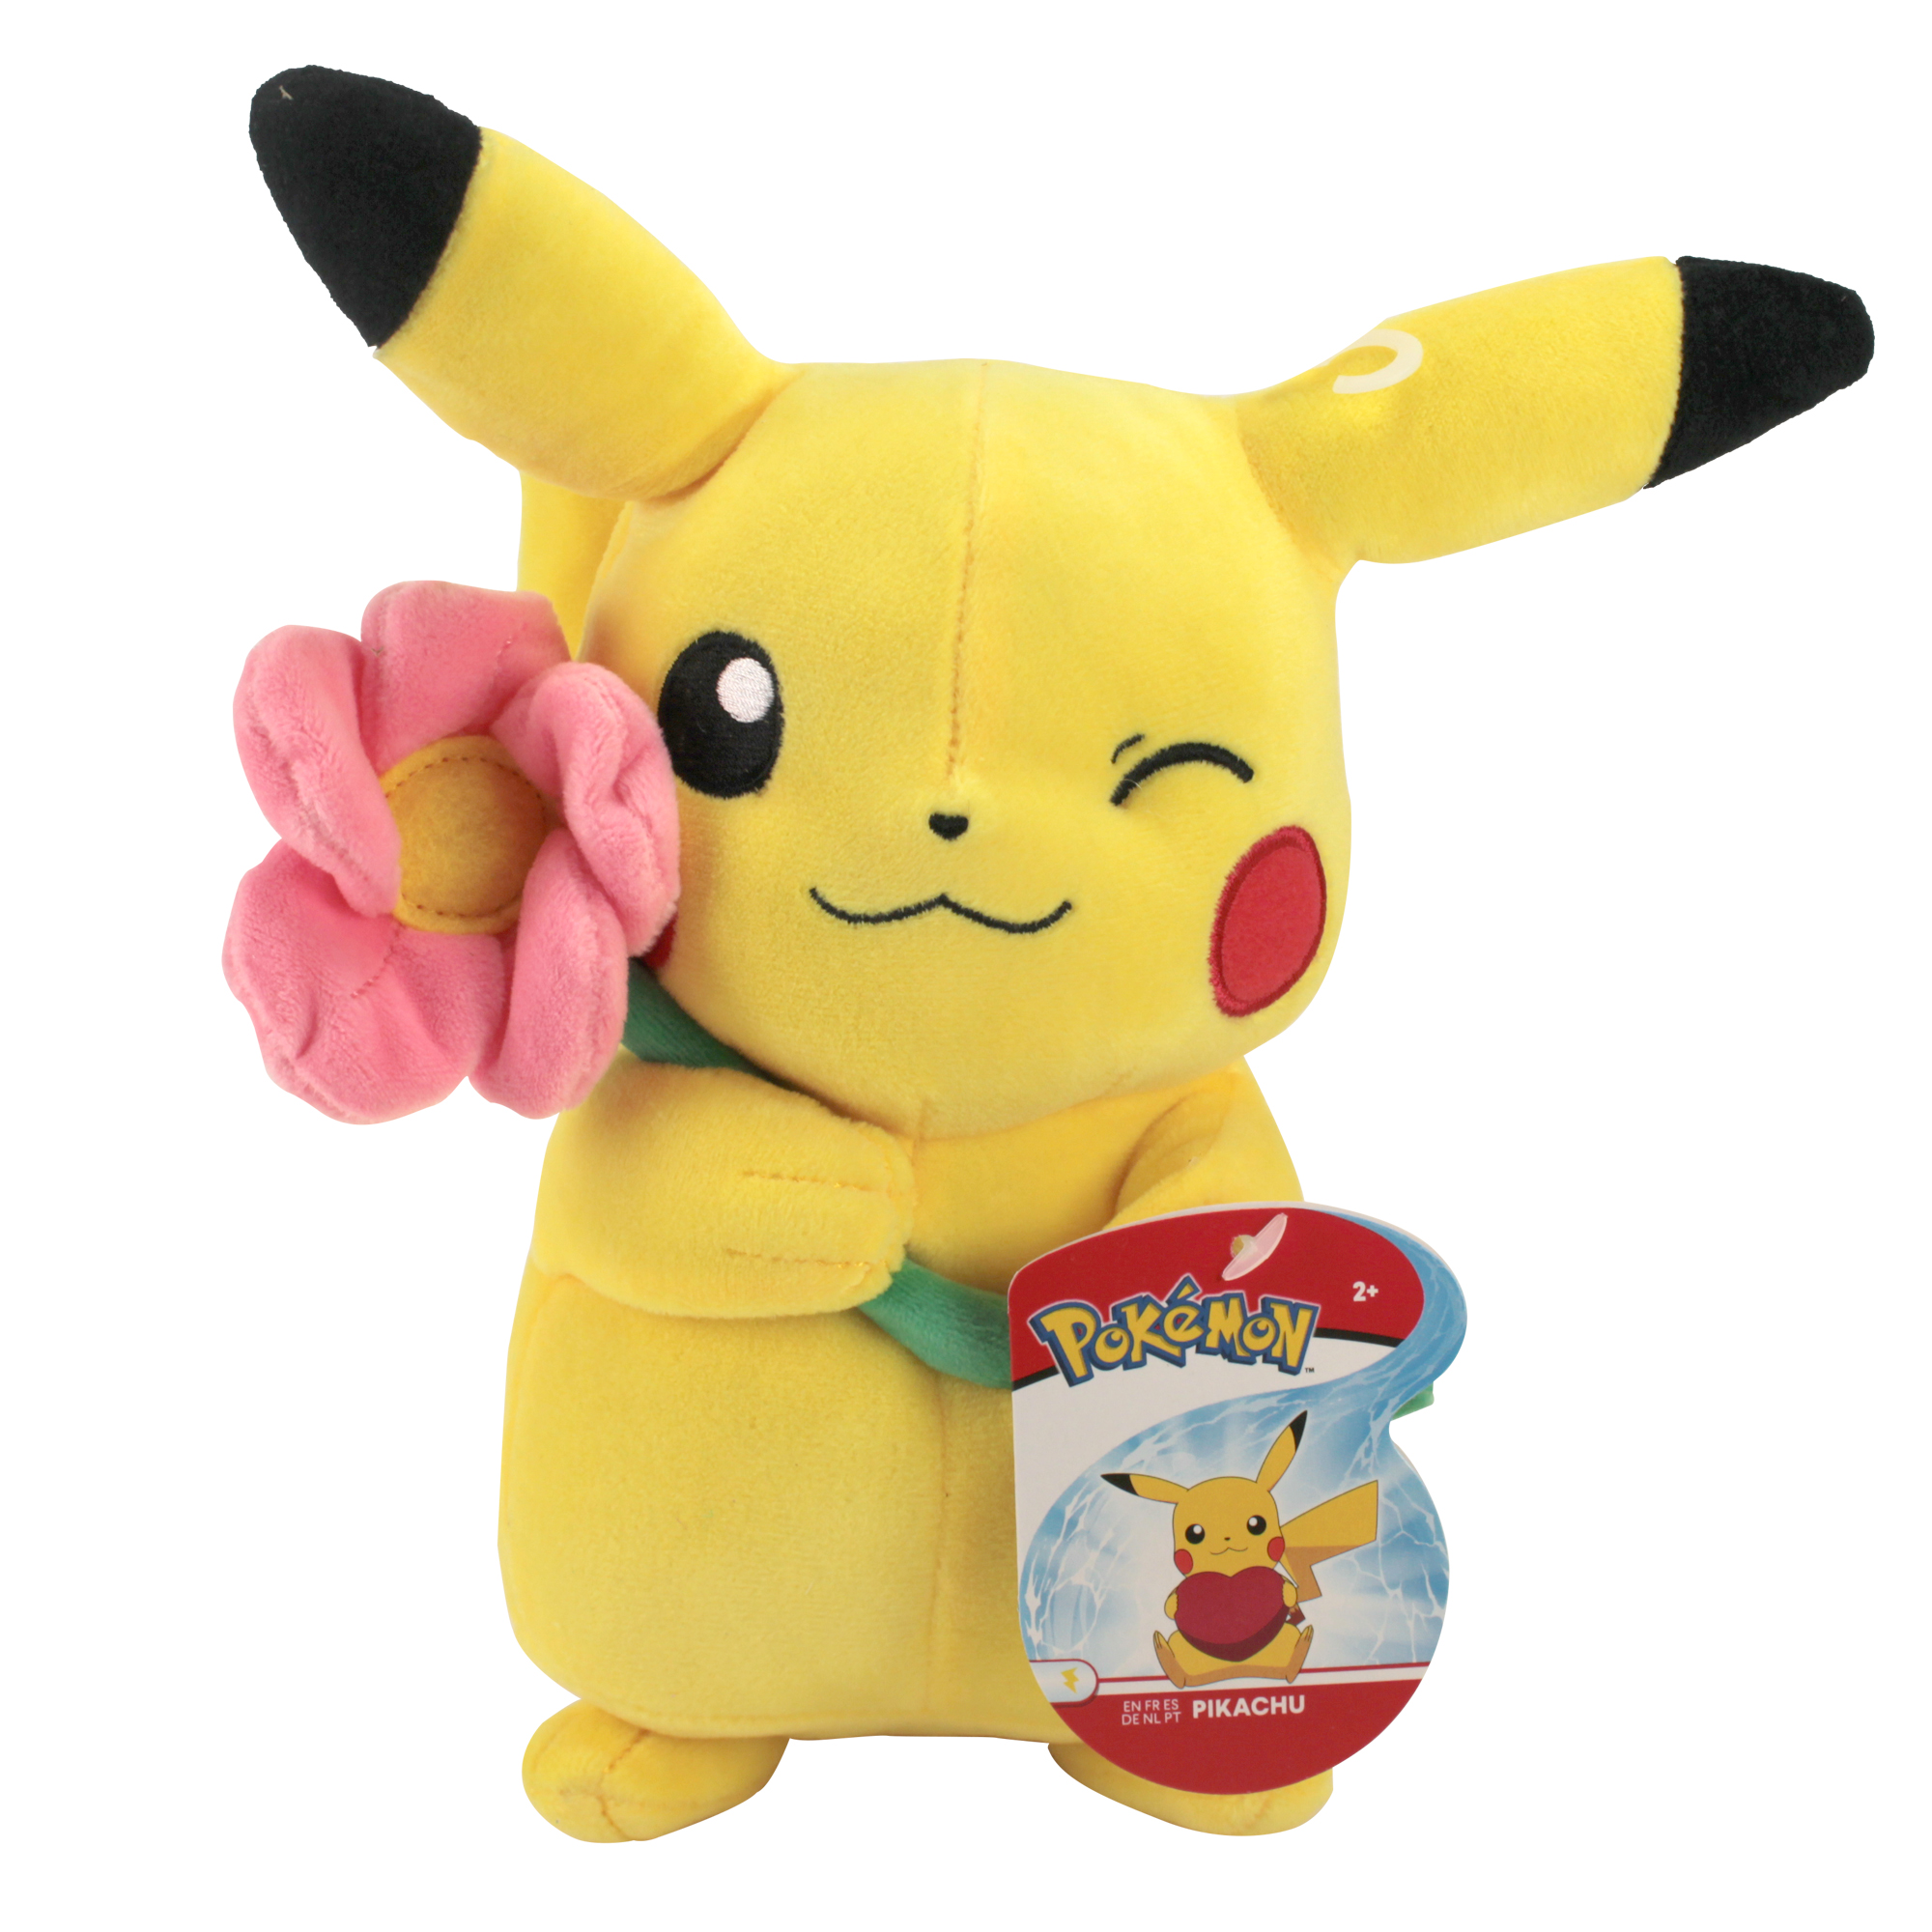 Limited Edition Pokémon Plush - 8" Pikachu with Flower - image 1 of 2